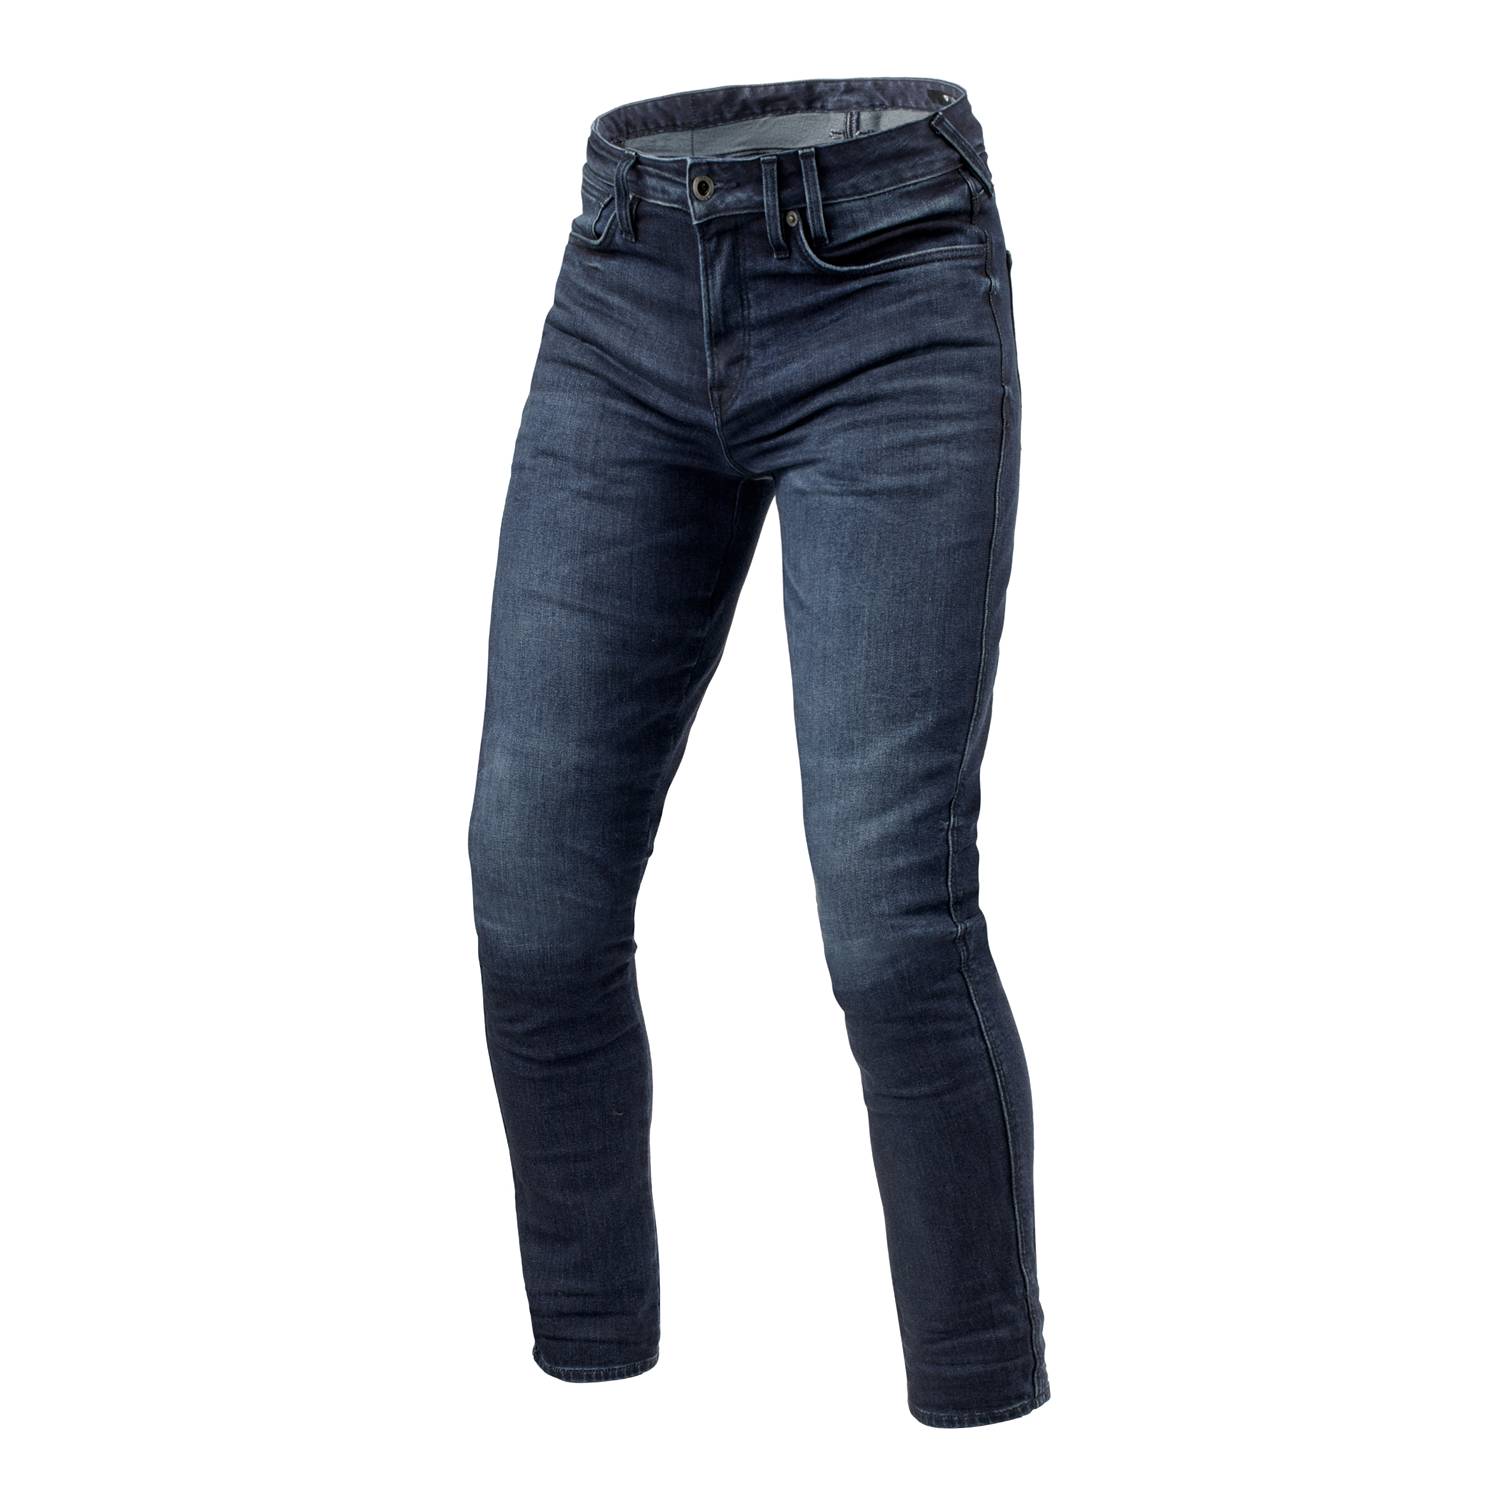 Image of REV'IT! Jeans Carlin SK Dark Blue Used L32 Motorcycle Jeans Talla L32/W28